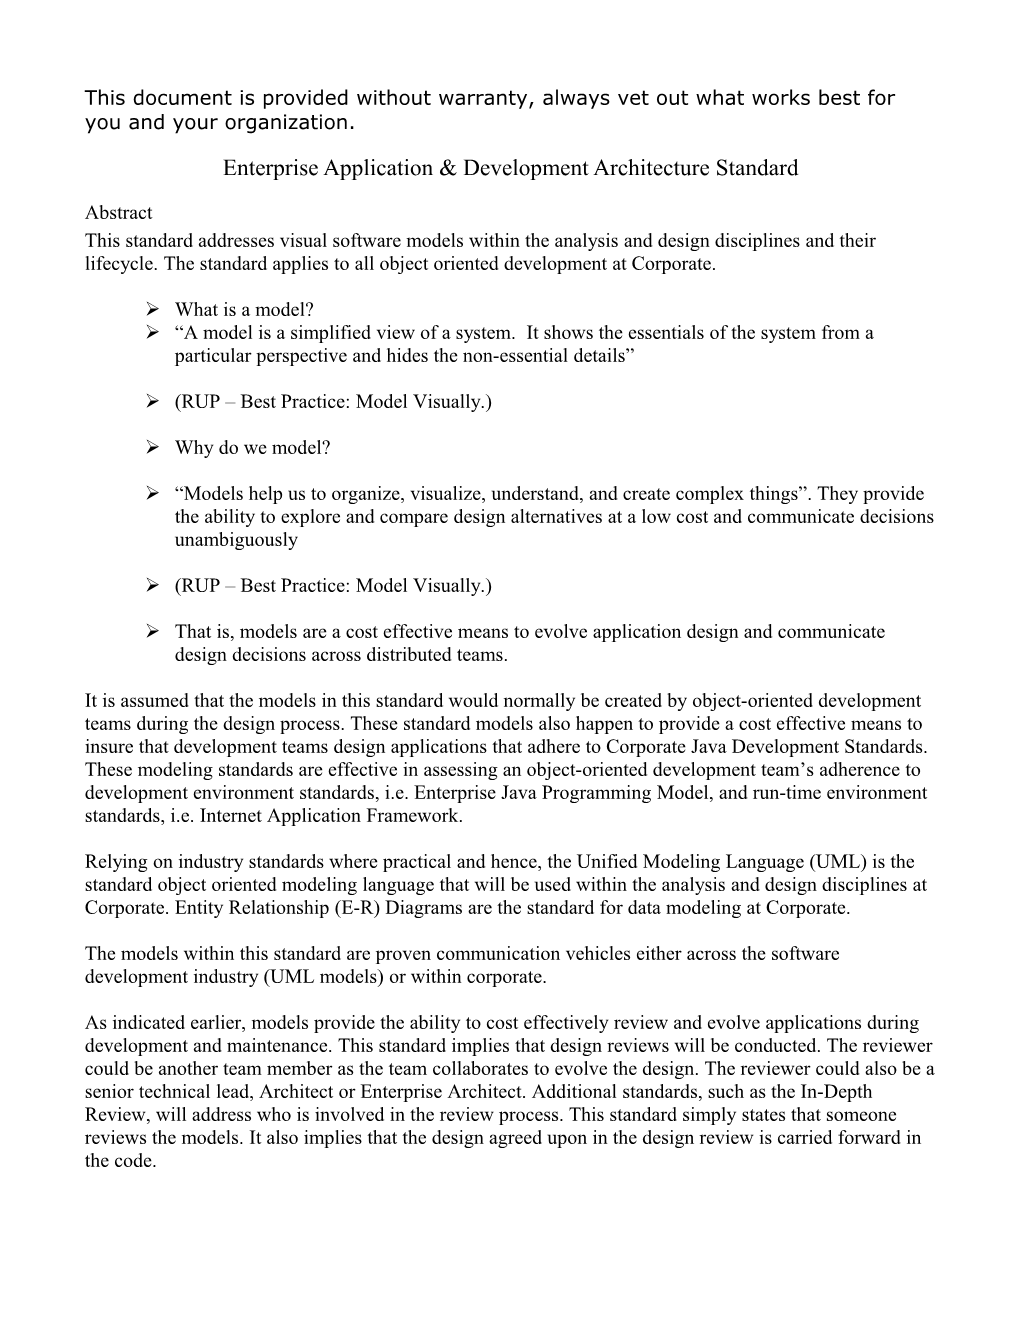 Enterprise Application & Development Architecture Standard